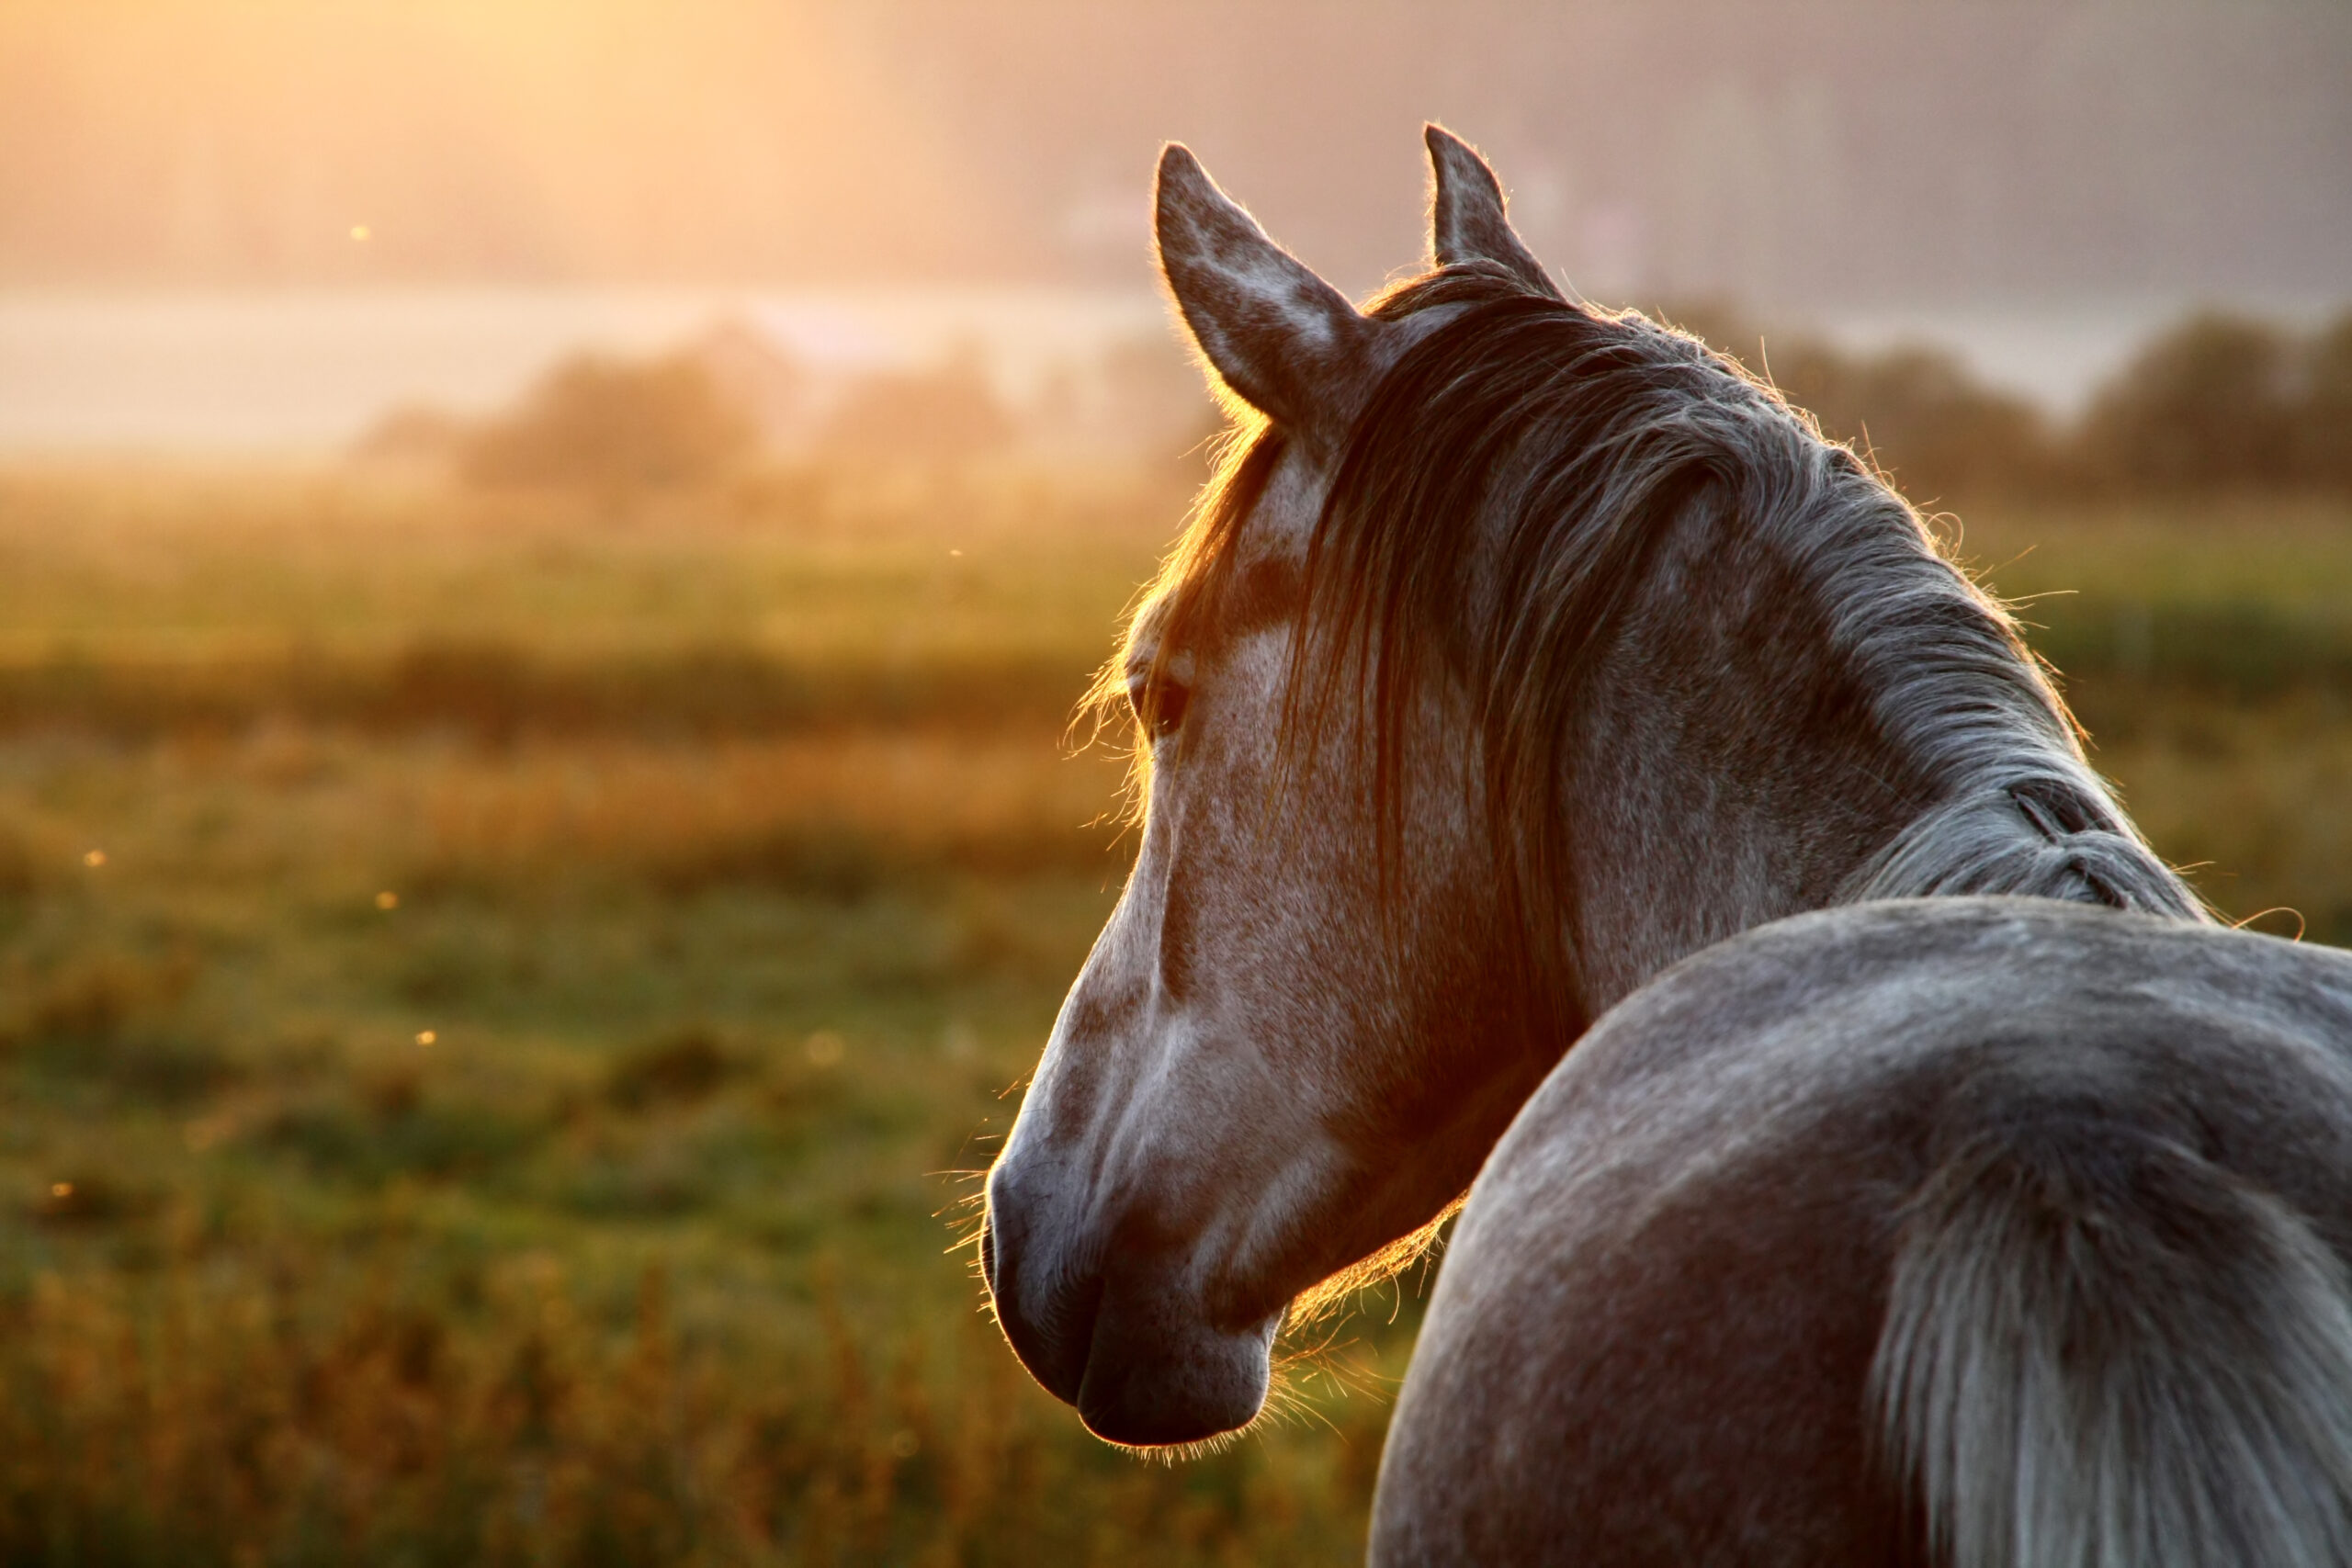 Hest i fokus med solnedgang i baggrunden - Fokust på heste